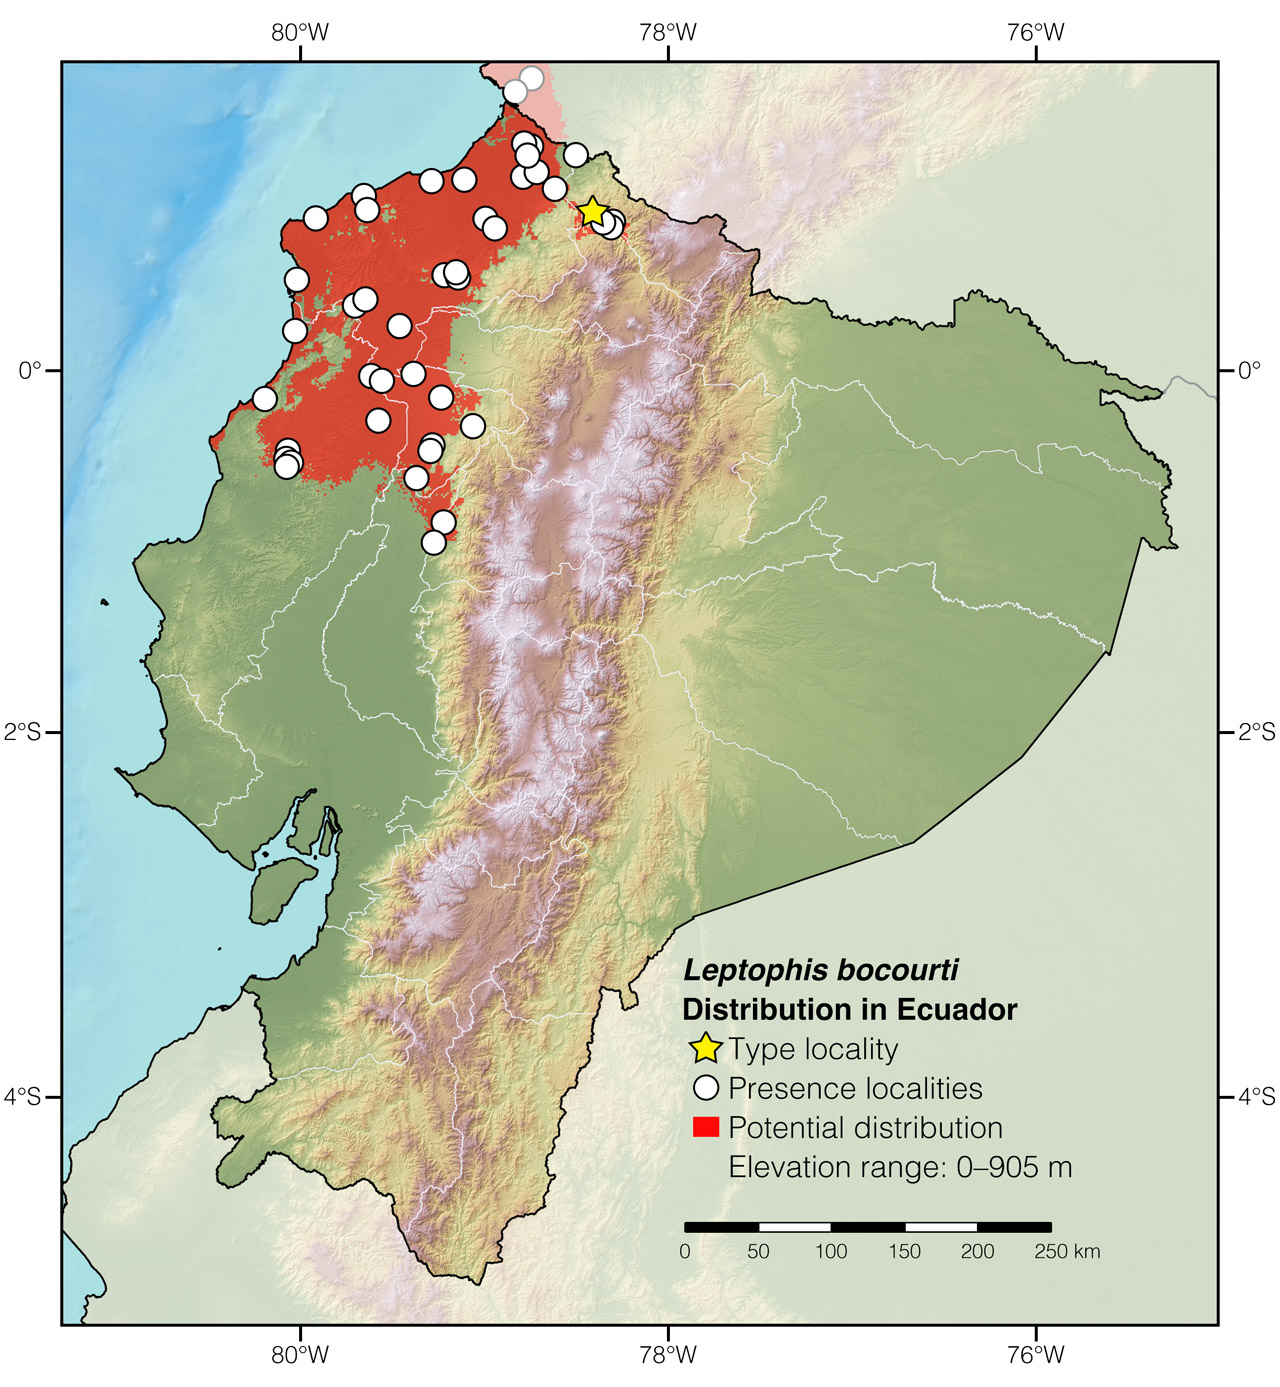 Distribution of Leptophis bocourti in Ecuador